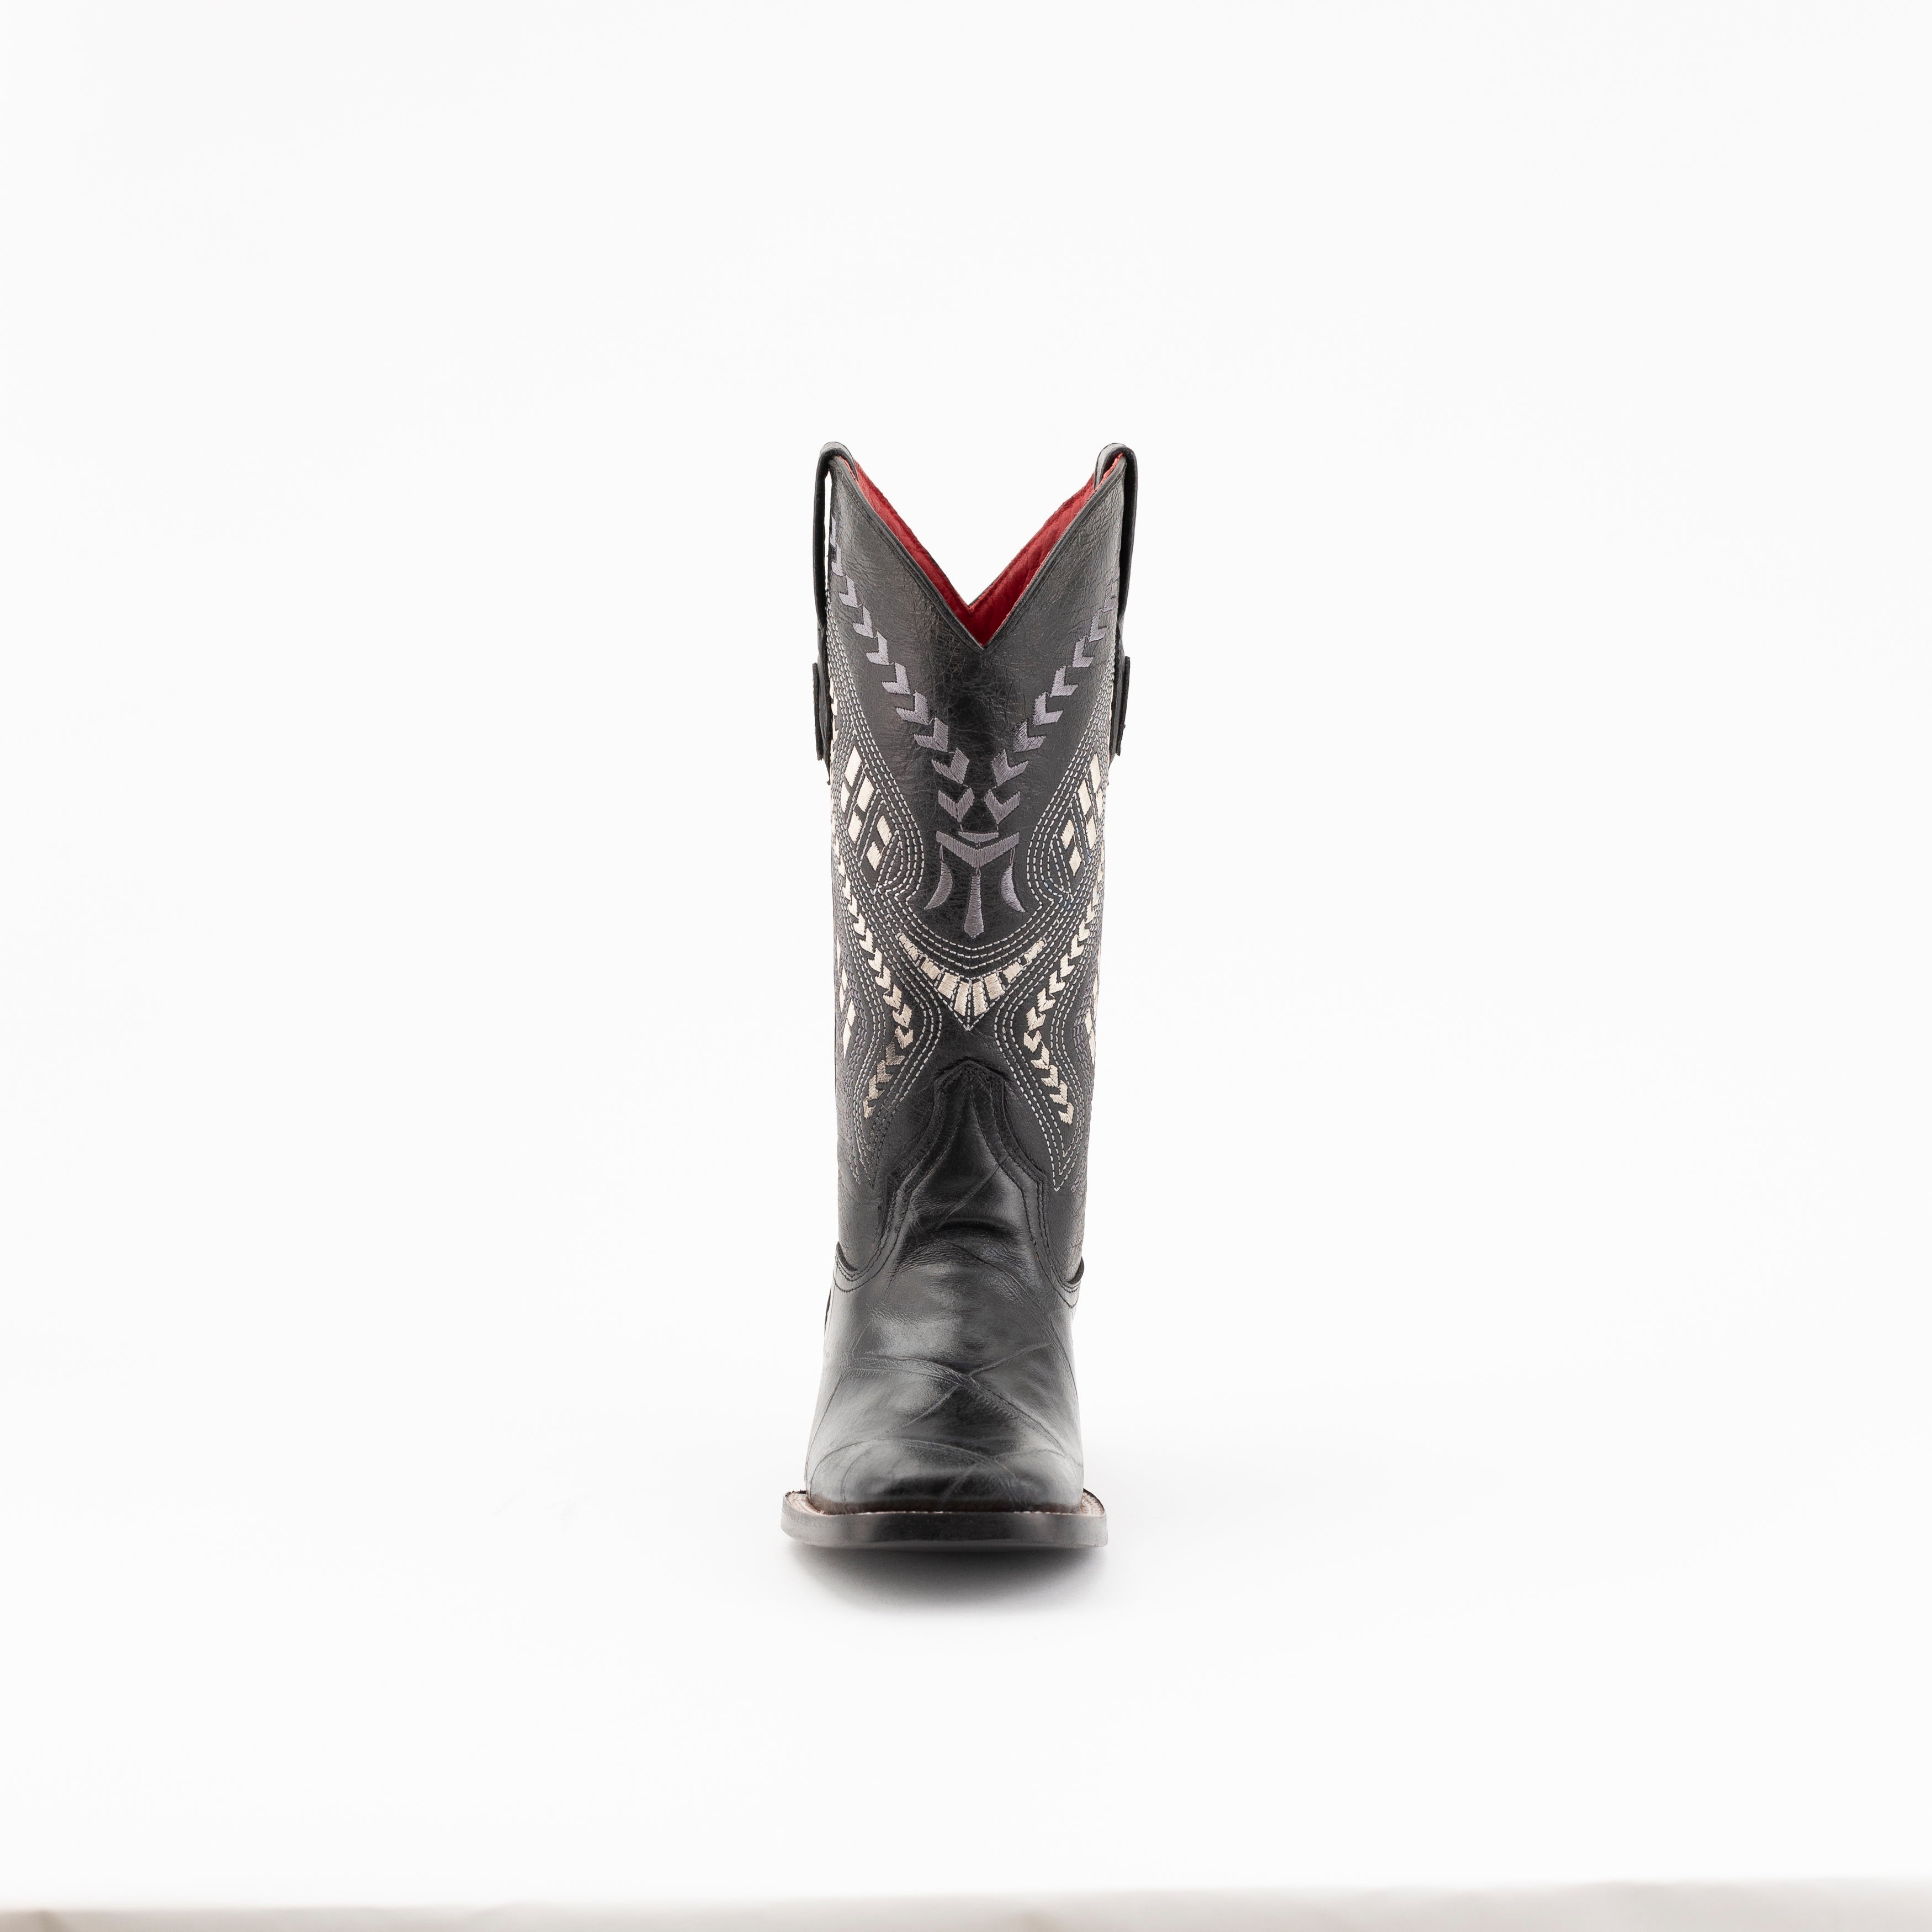 Ferrini USA Jesse Ladies' Boots